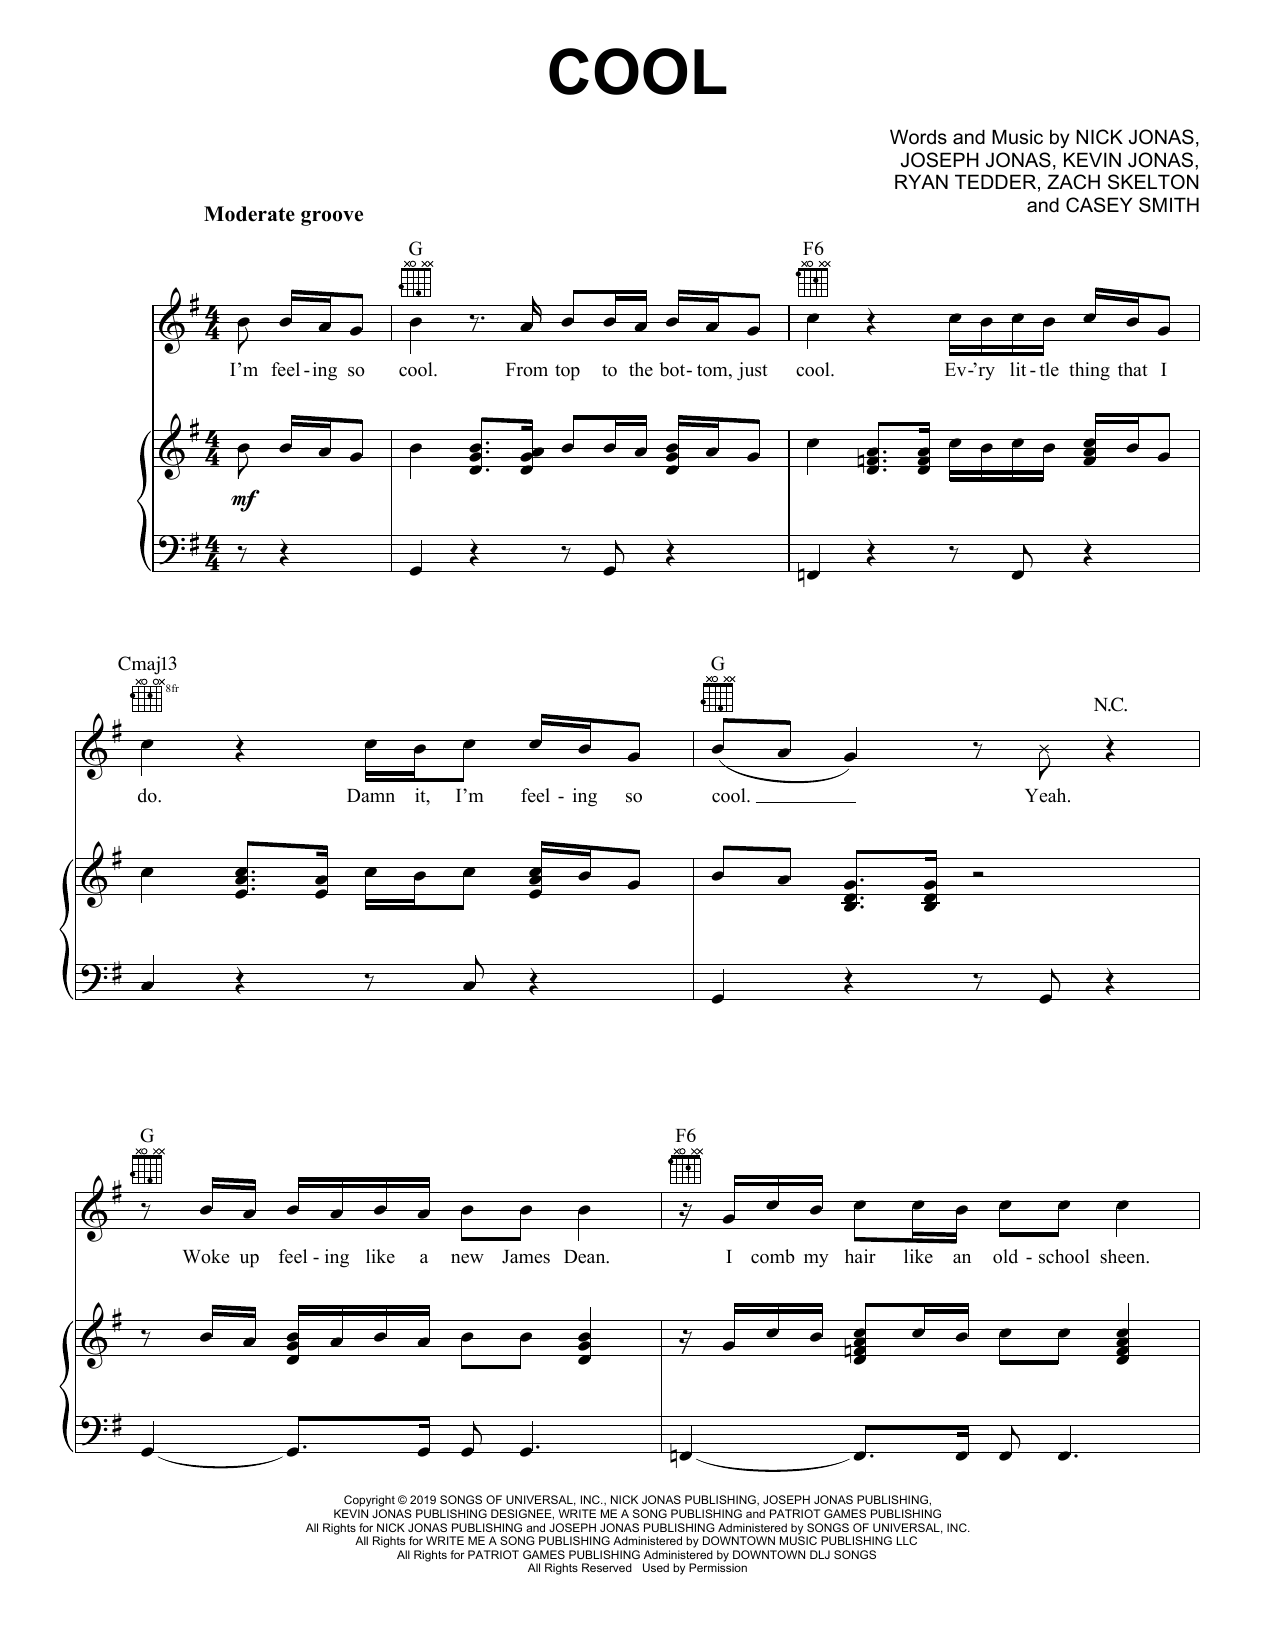 Jonas Brothers Cool Sheet Music Notes & Chords for Guitar Chords/Lyrics - Download or Print PDF